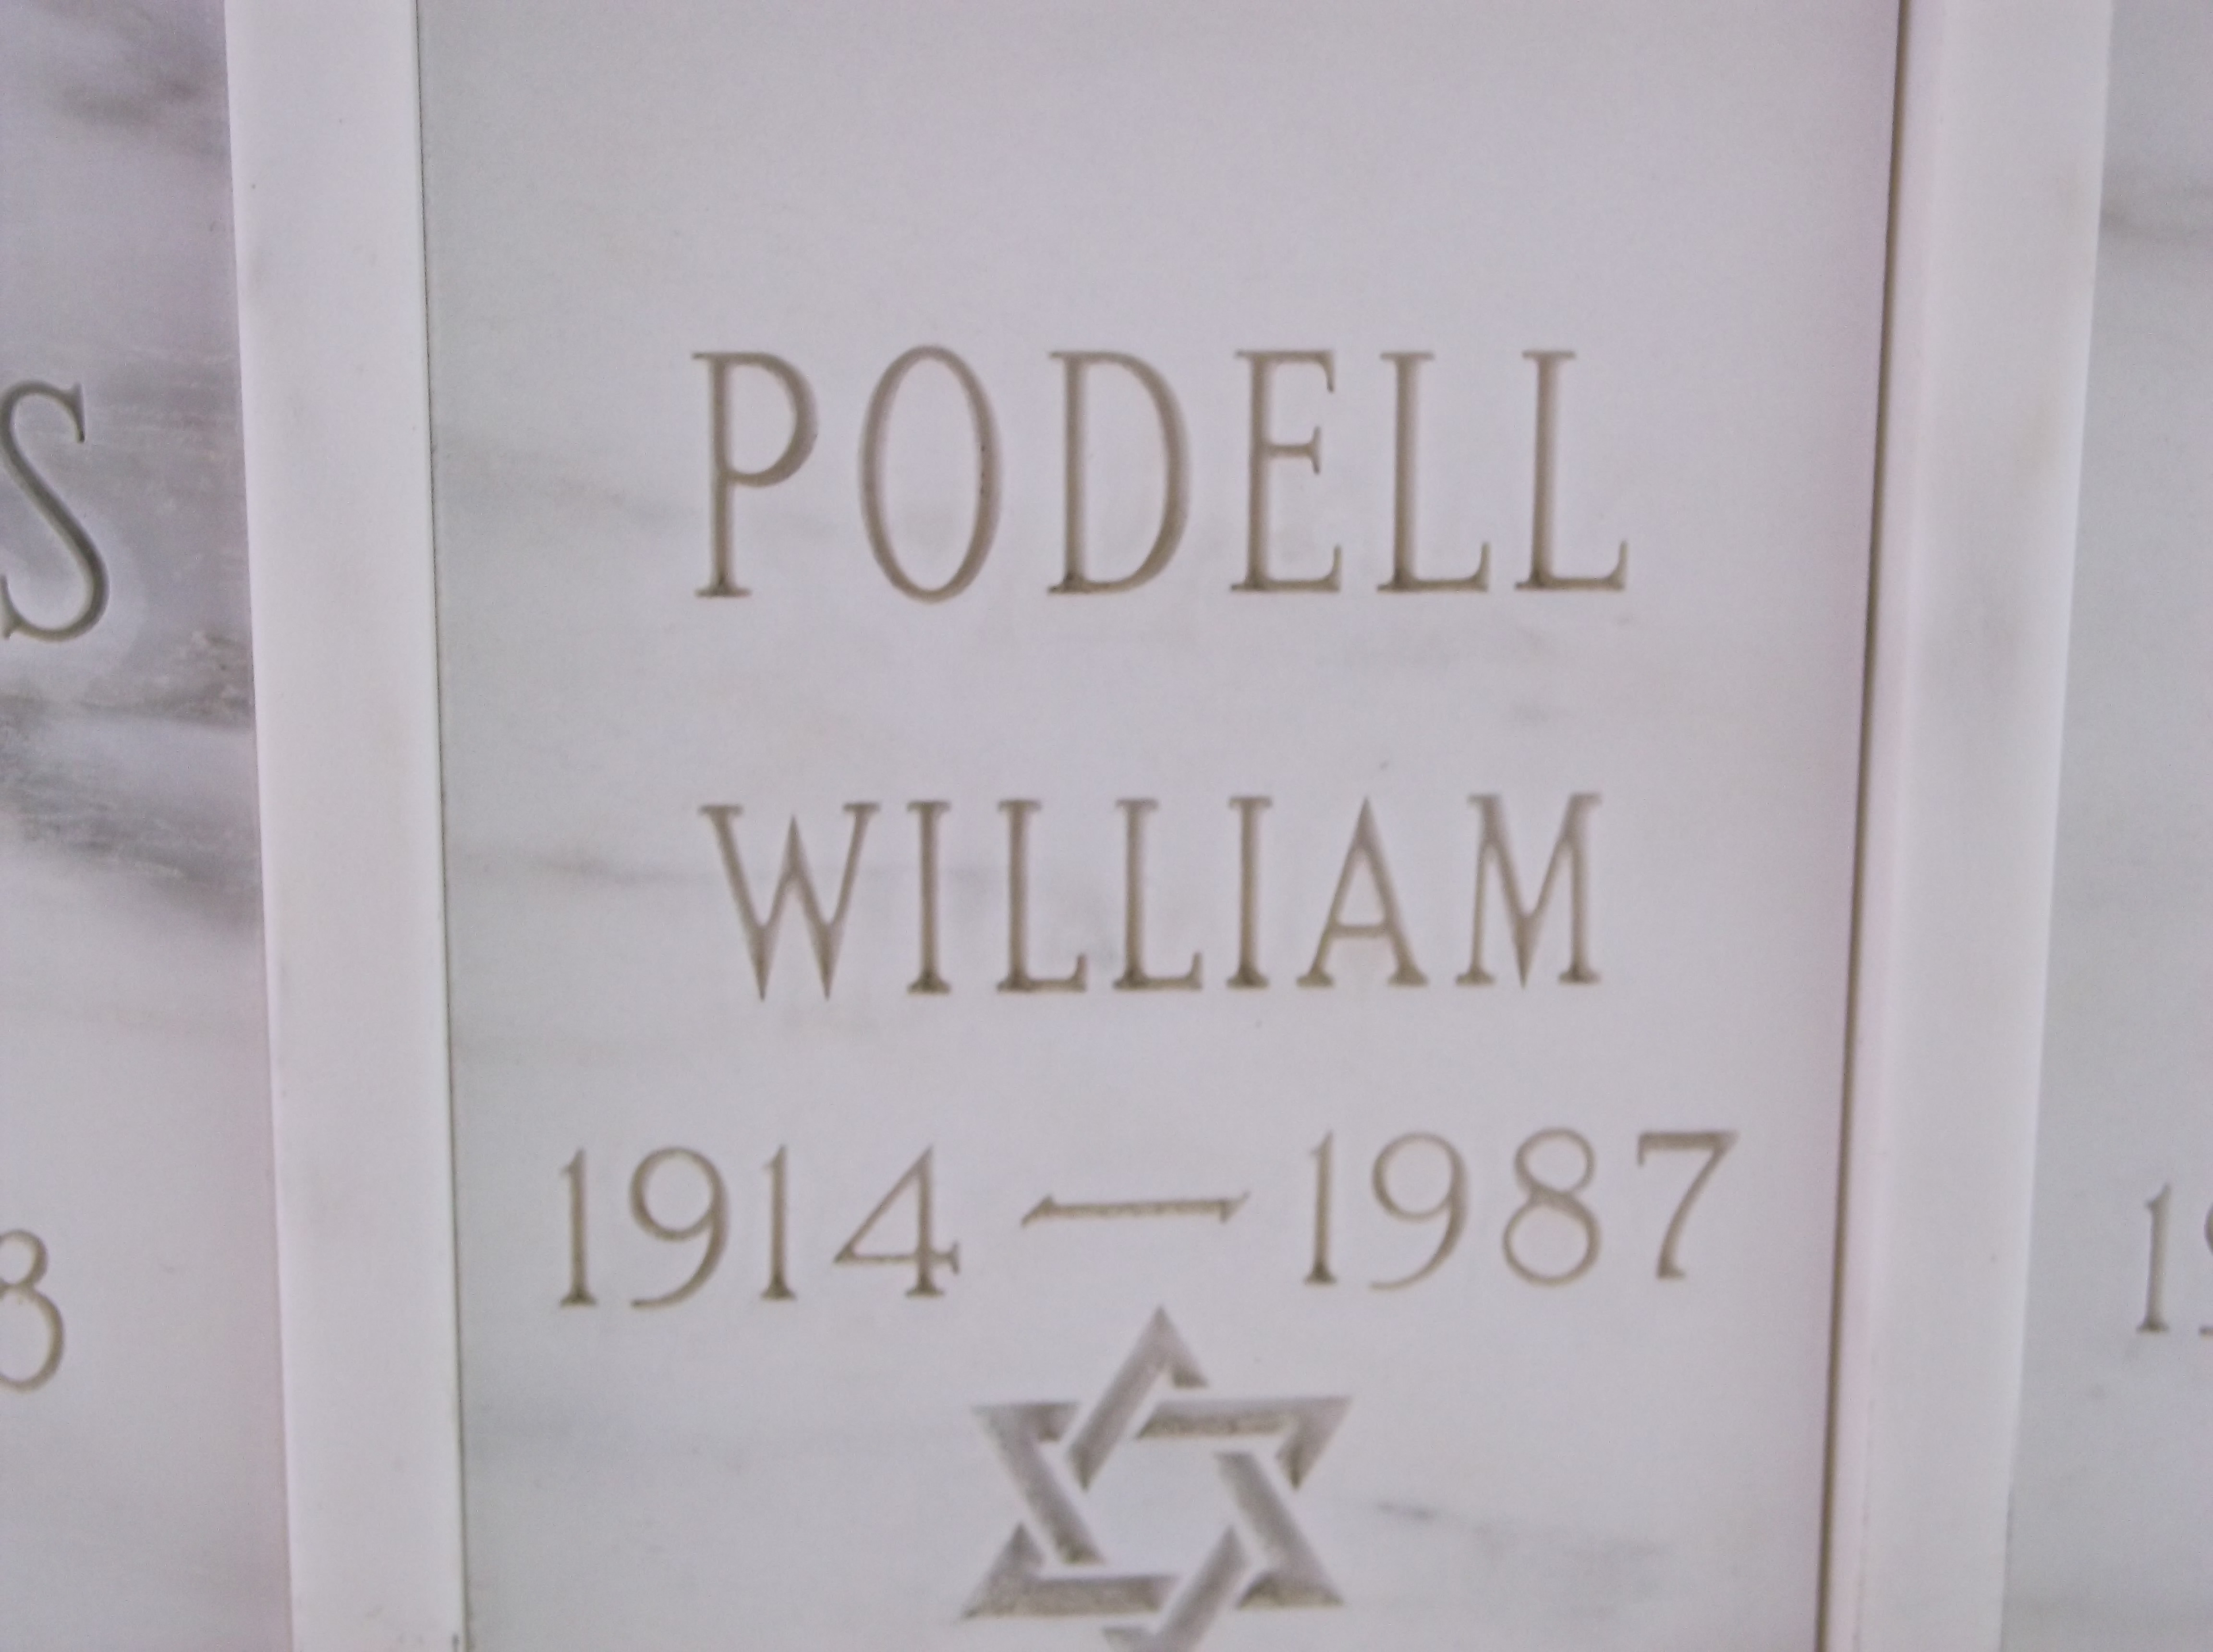 William Podell